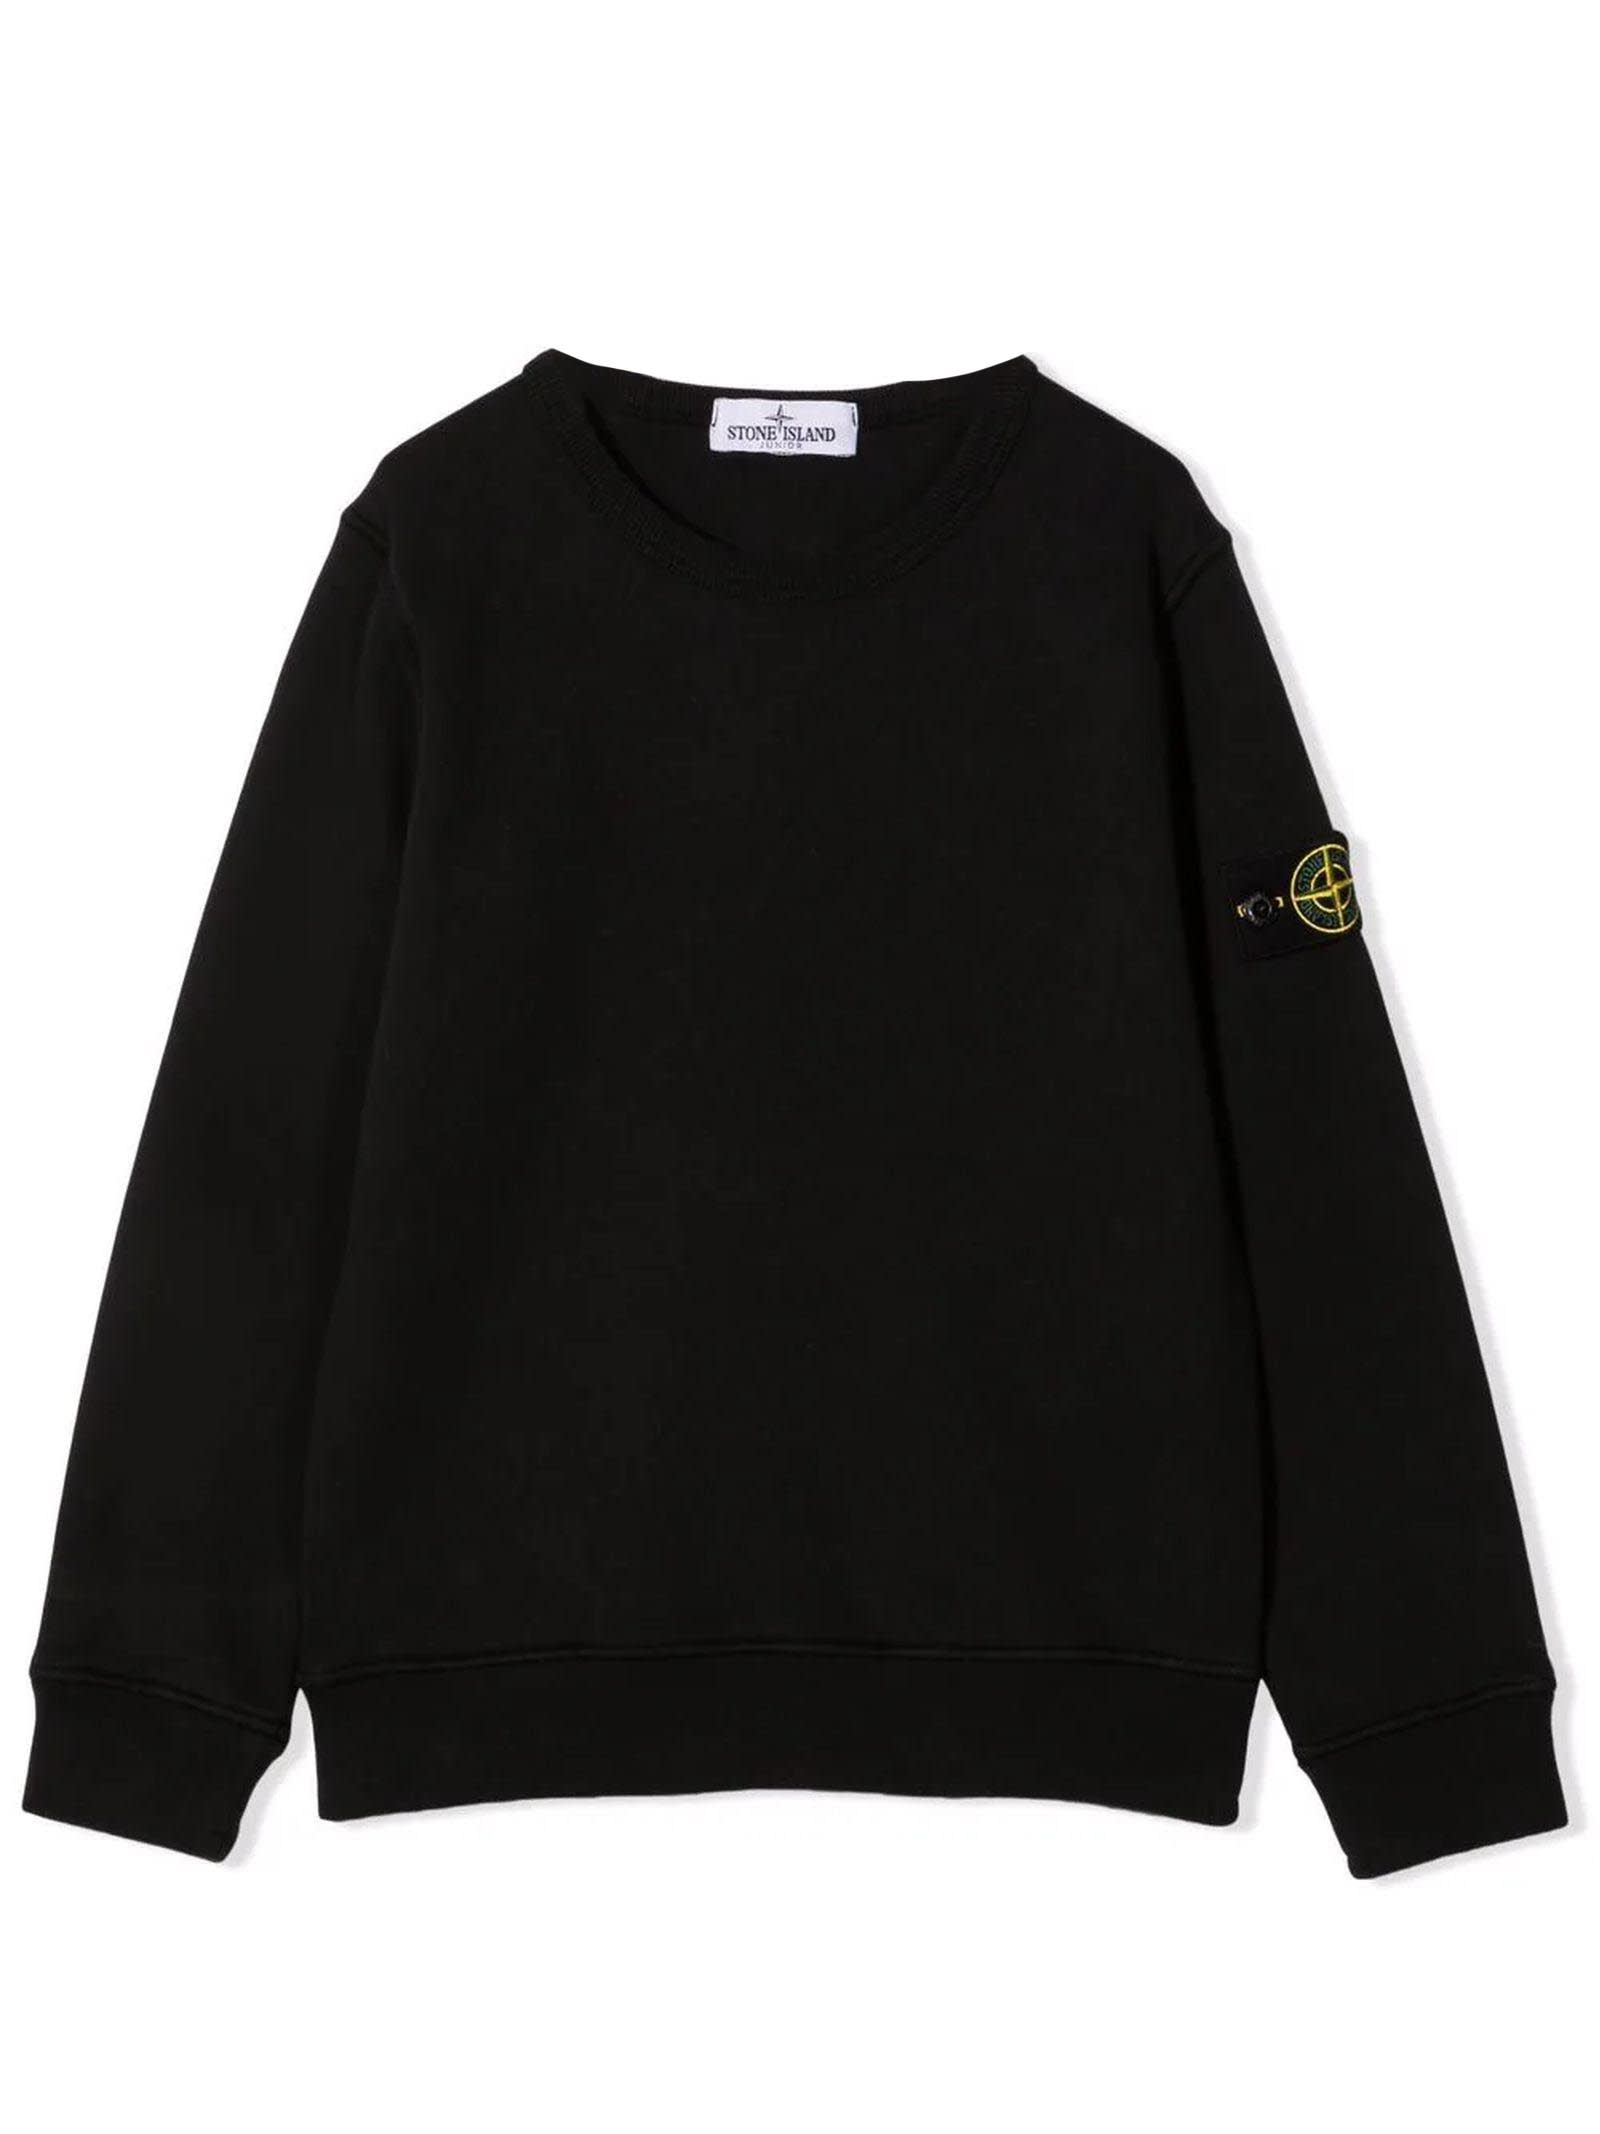 Stone Island Black Cotton Sweater